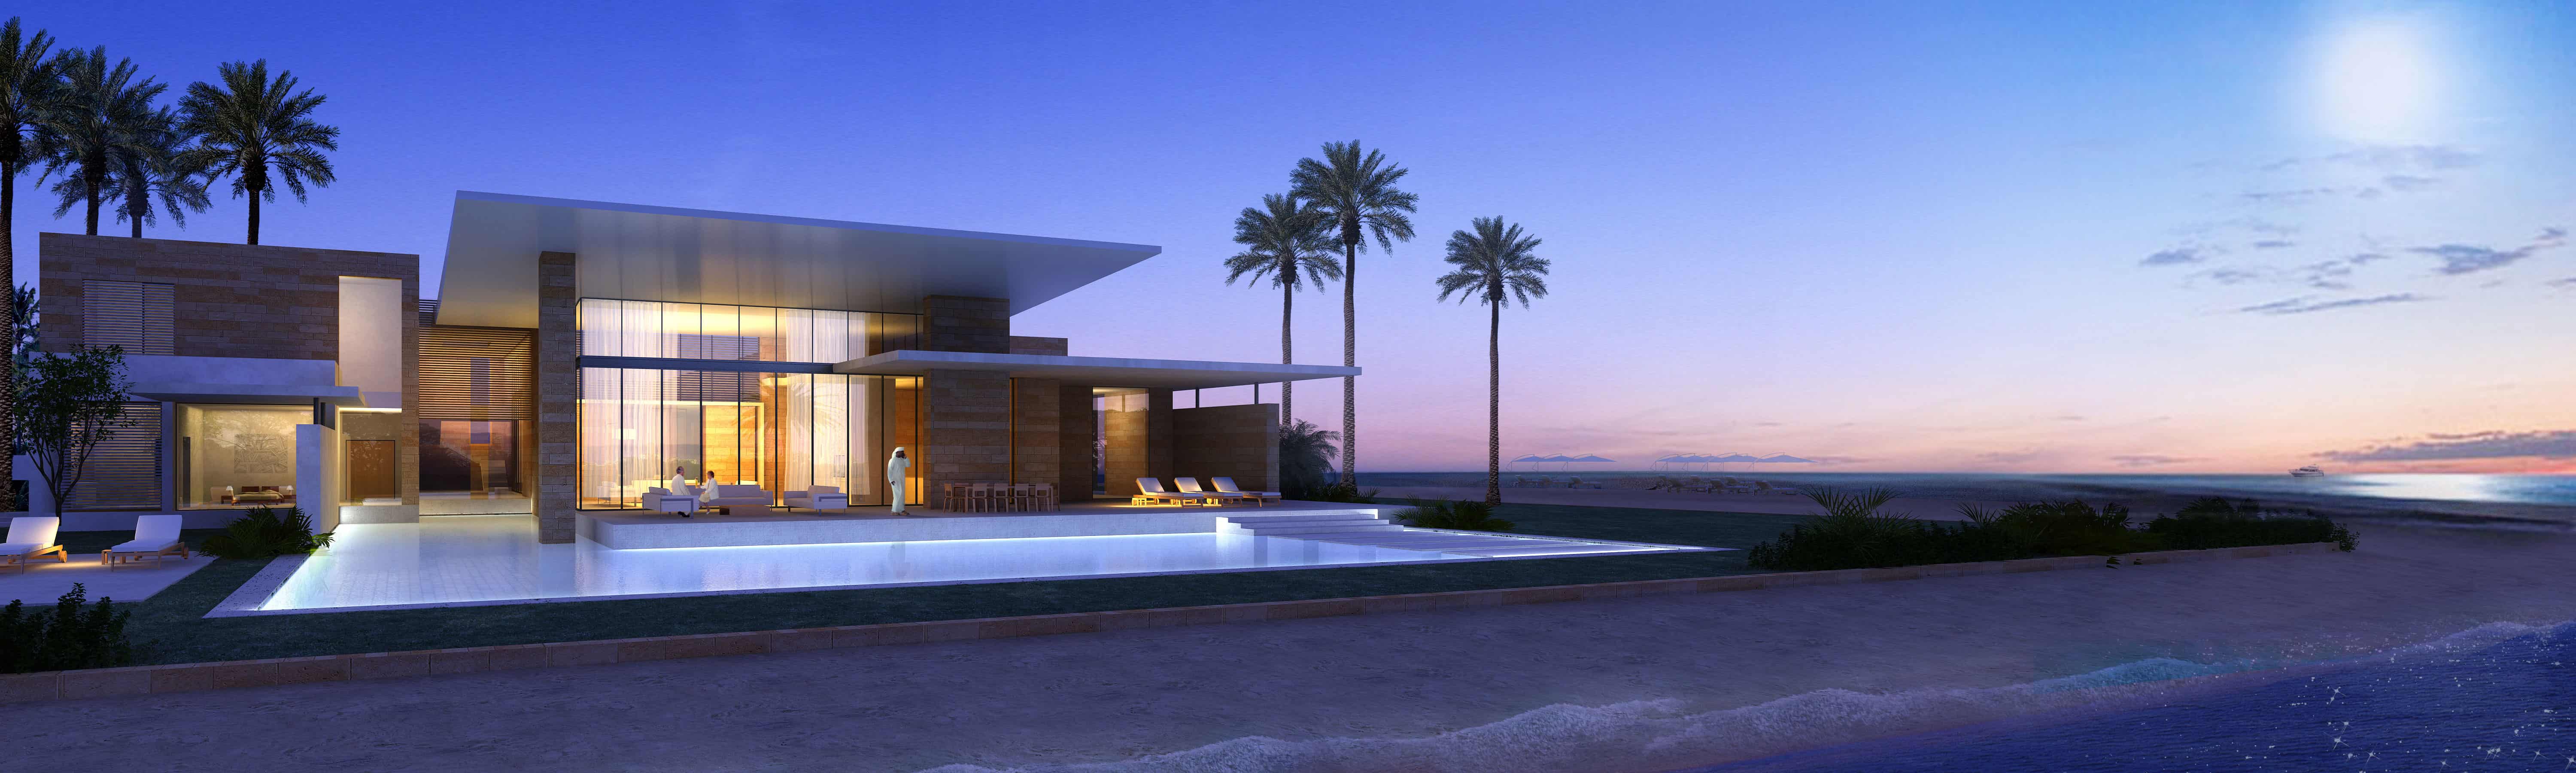 0828_Dubai Villas_081028_large_render_beachside